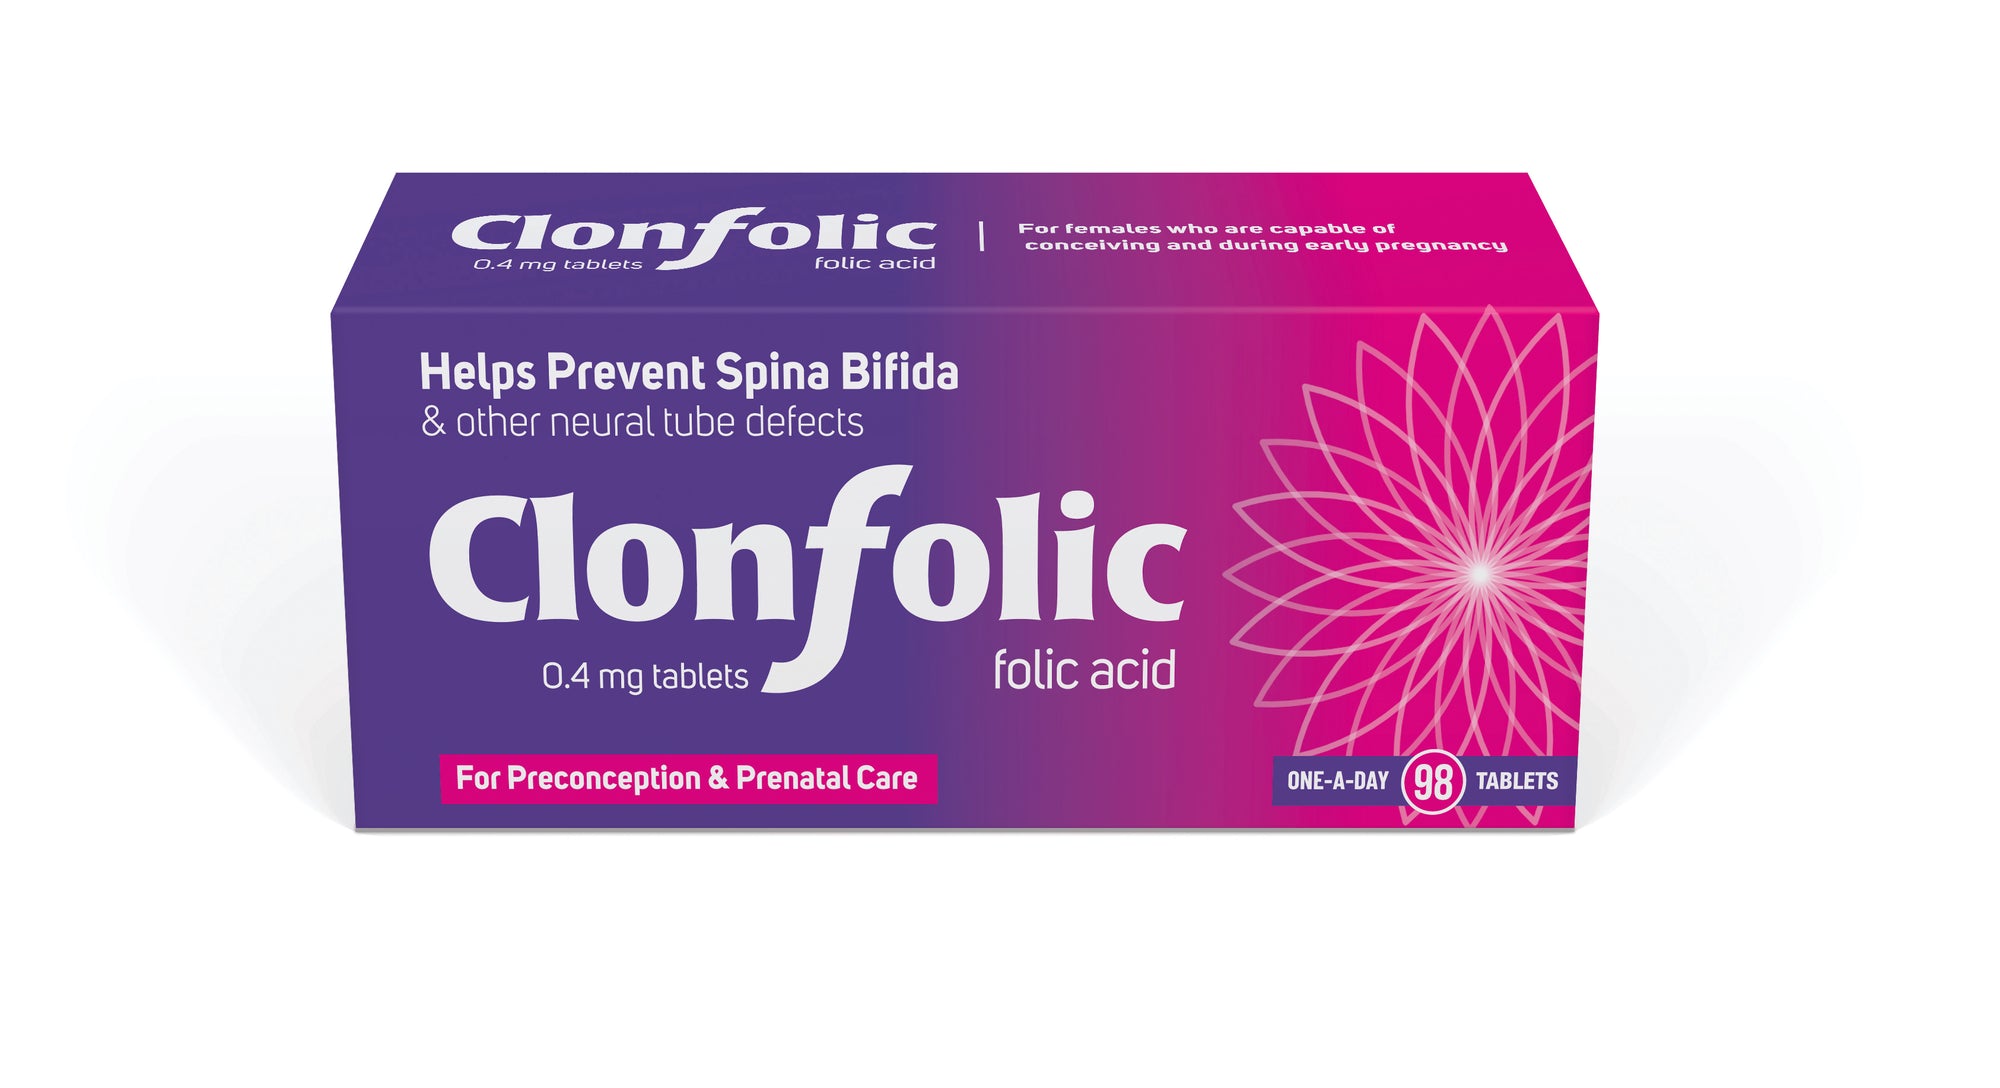 Clonfllic folic acic tablets 98 pack, Leahys pharmacy